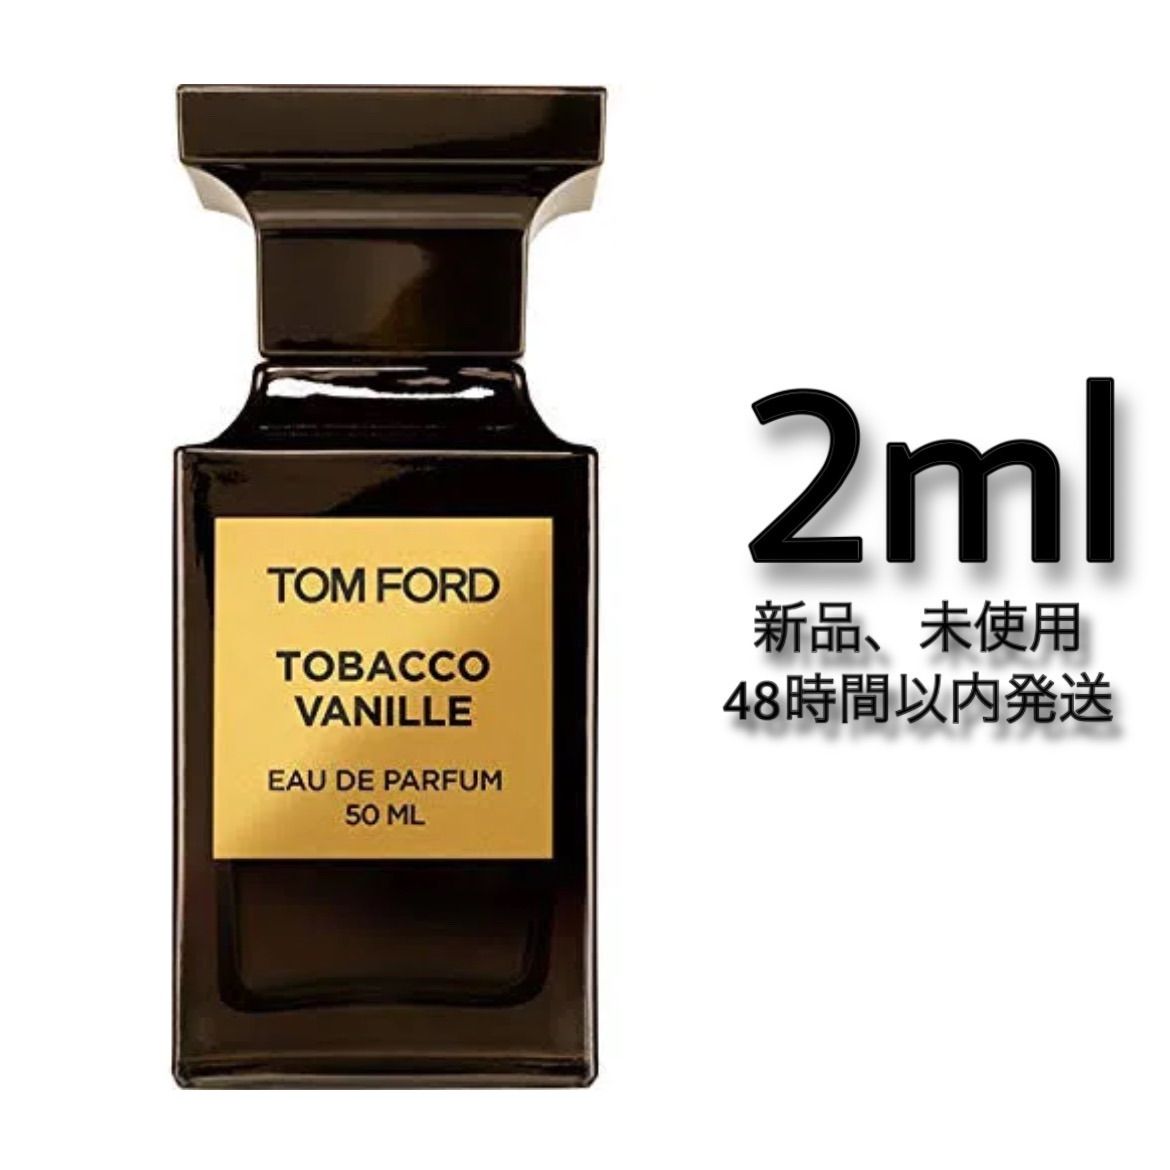 TOMFORD トムフォード タバコバニラ 1.5ml 香水 大人気 - 香水 